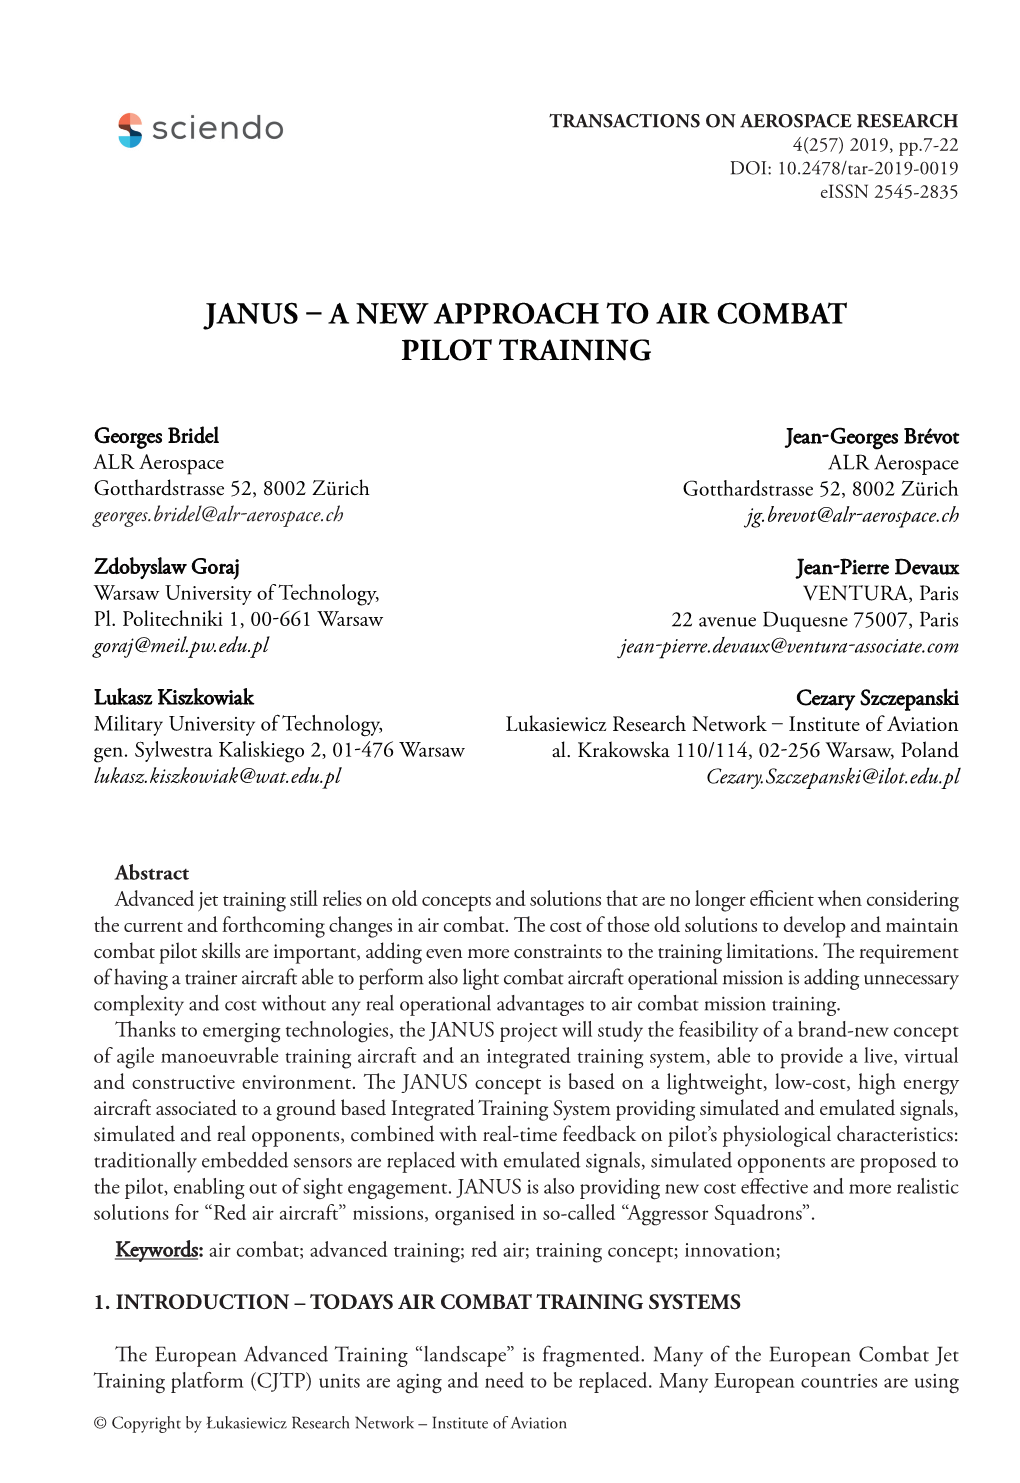 Janus – a New Approach to Air Combat Pilot Training